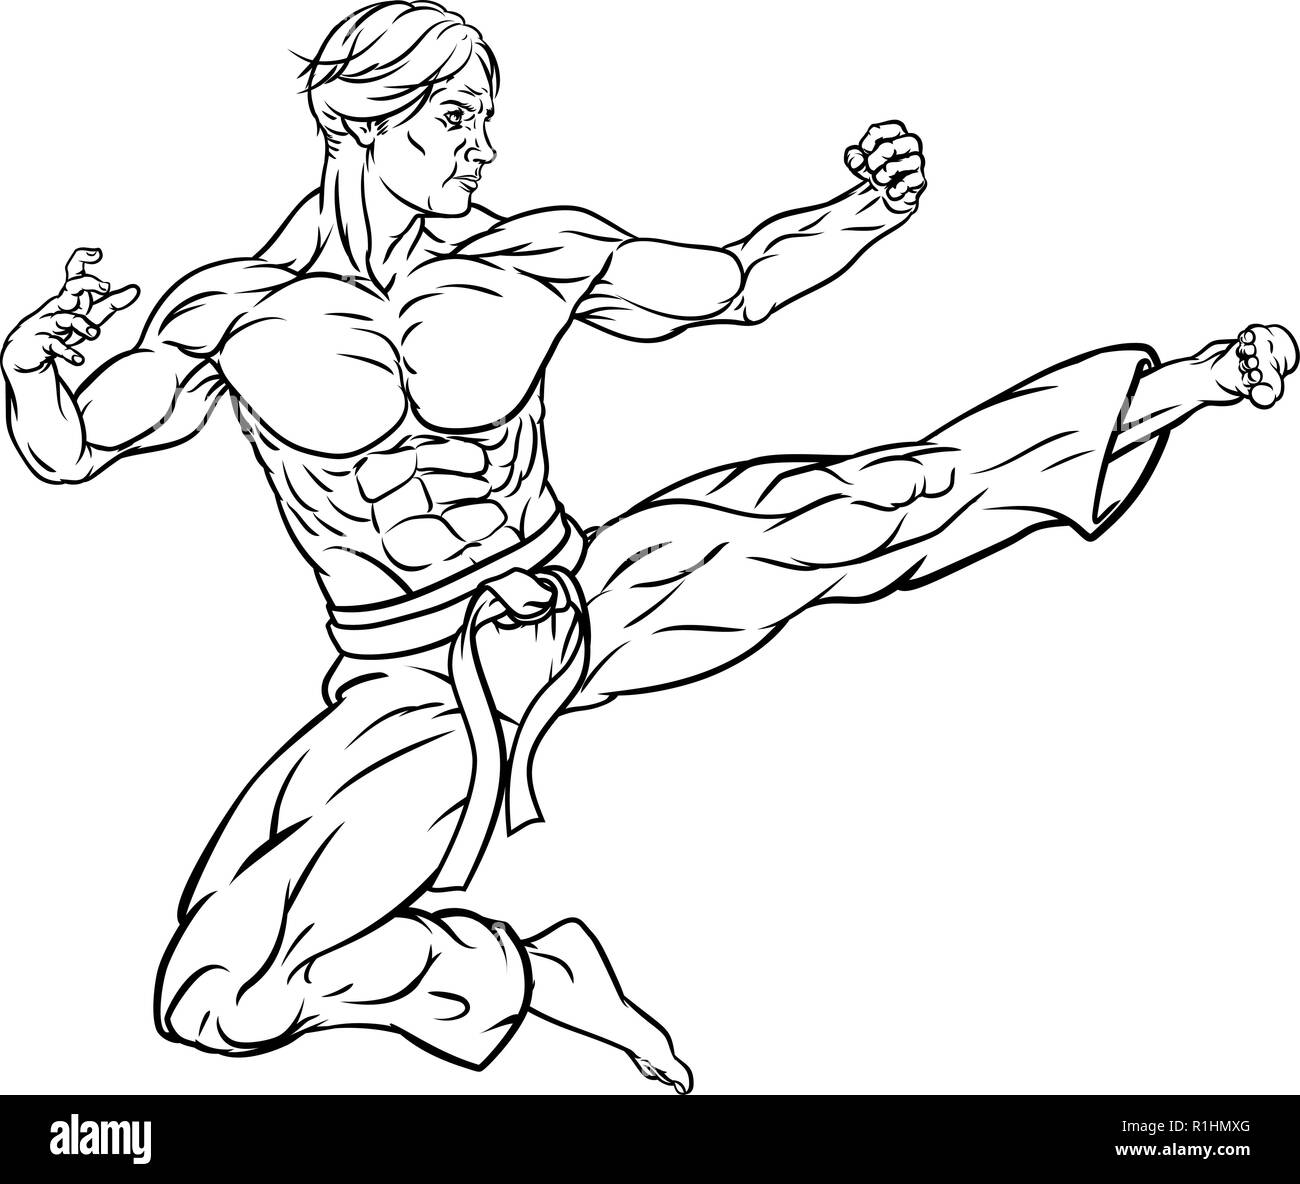 Kung Fu Poses - Male kung fu pose | PoseMy.Art